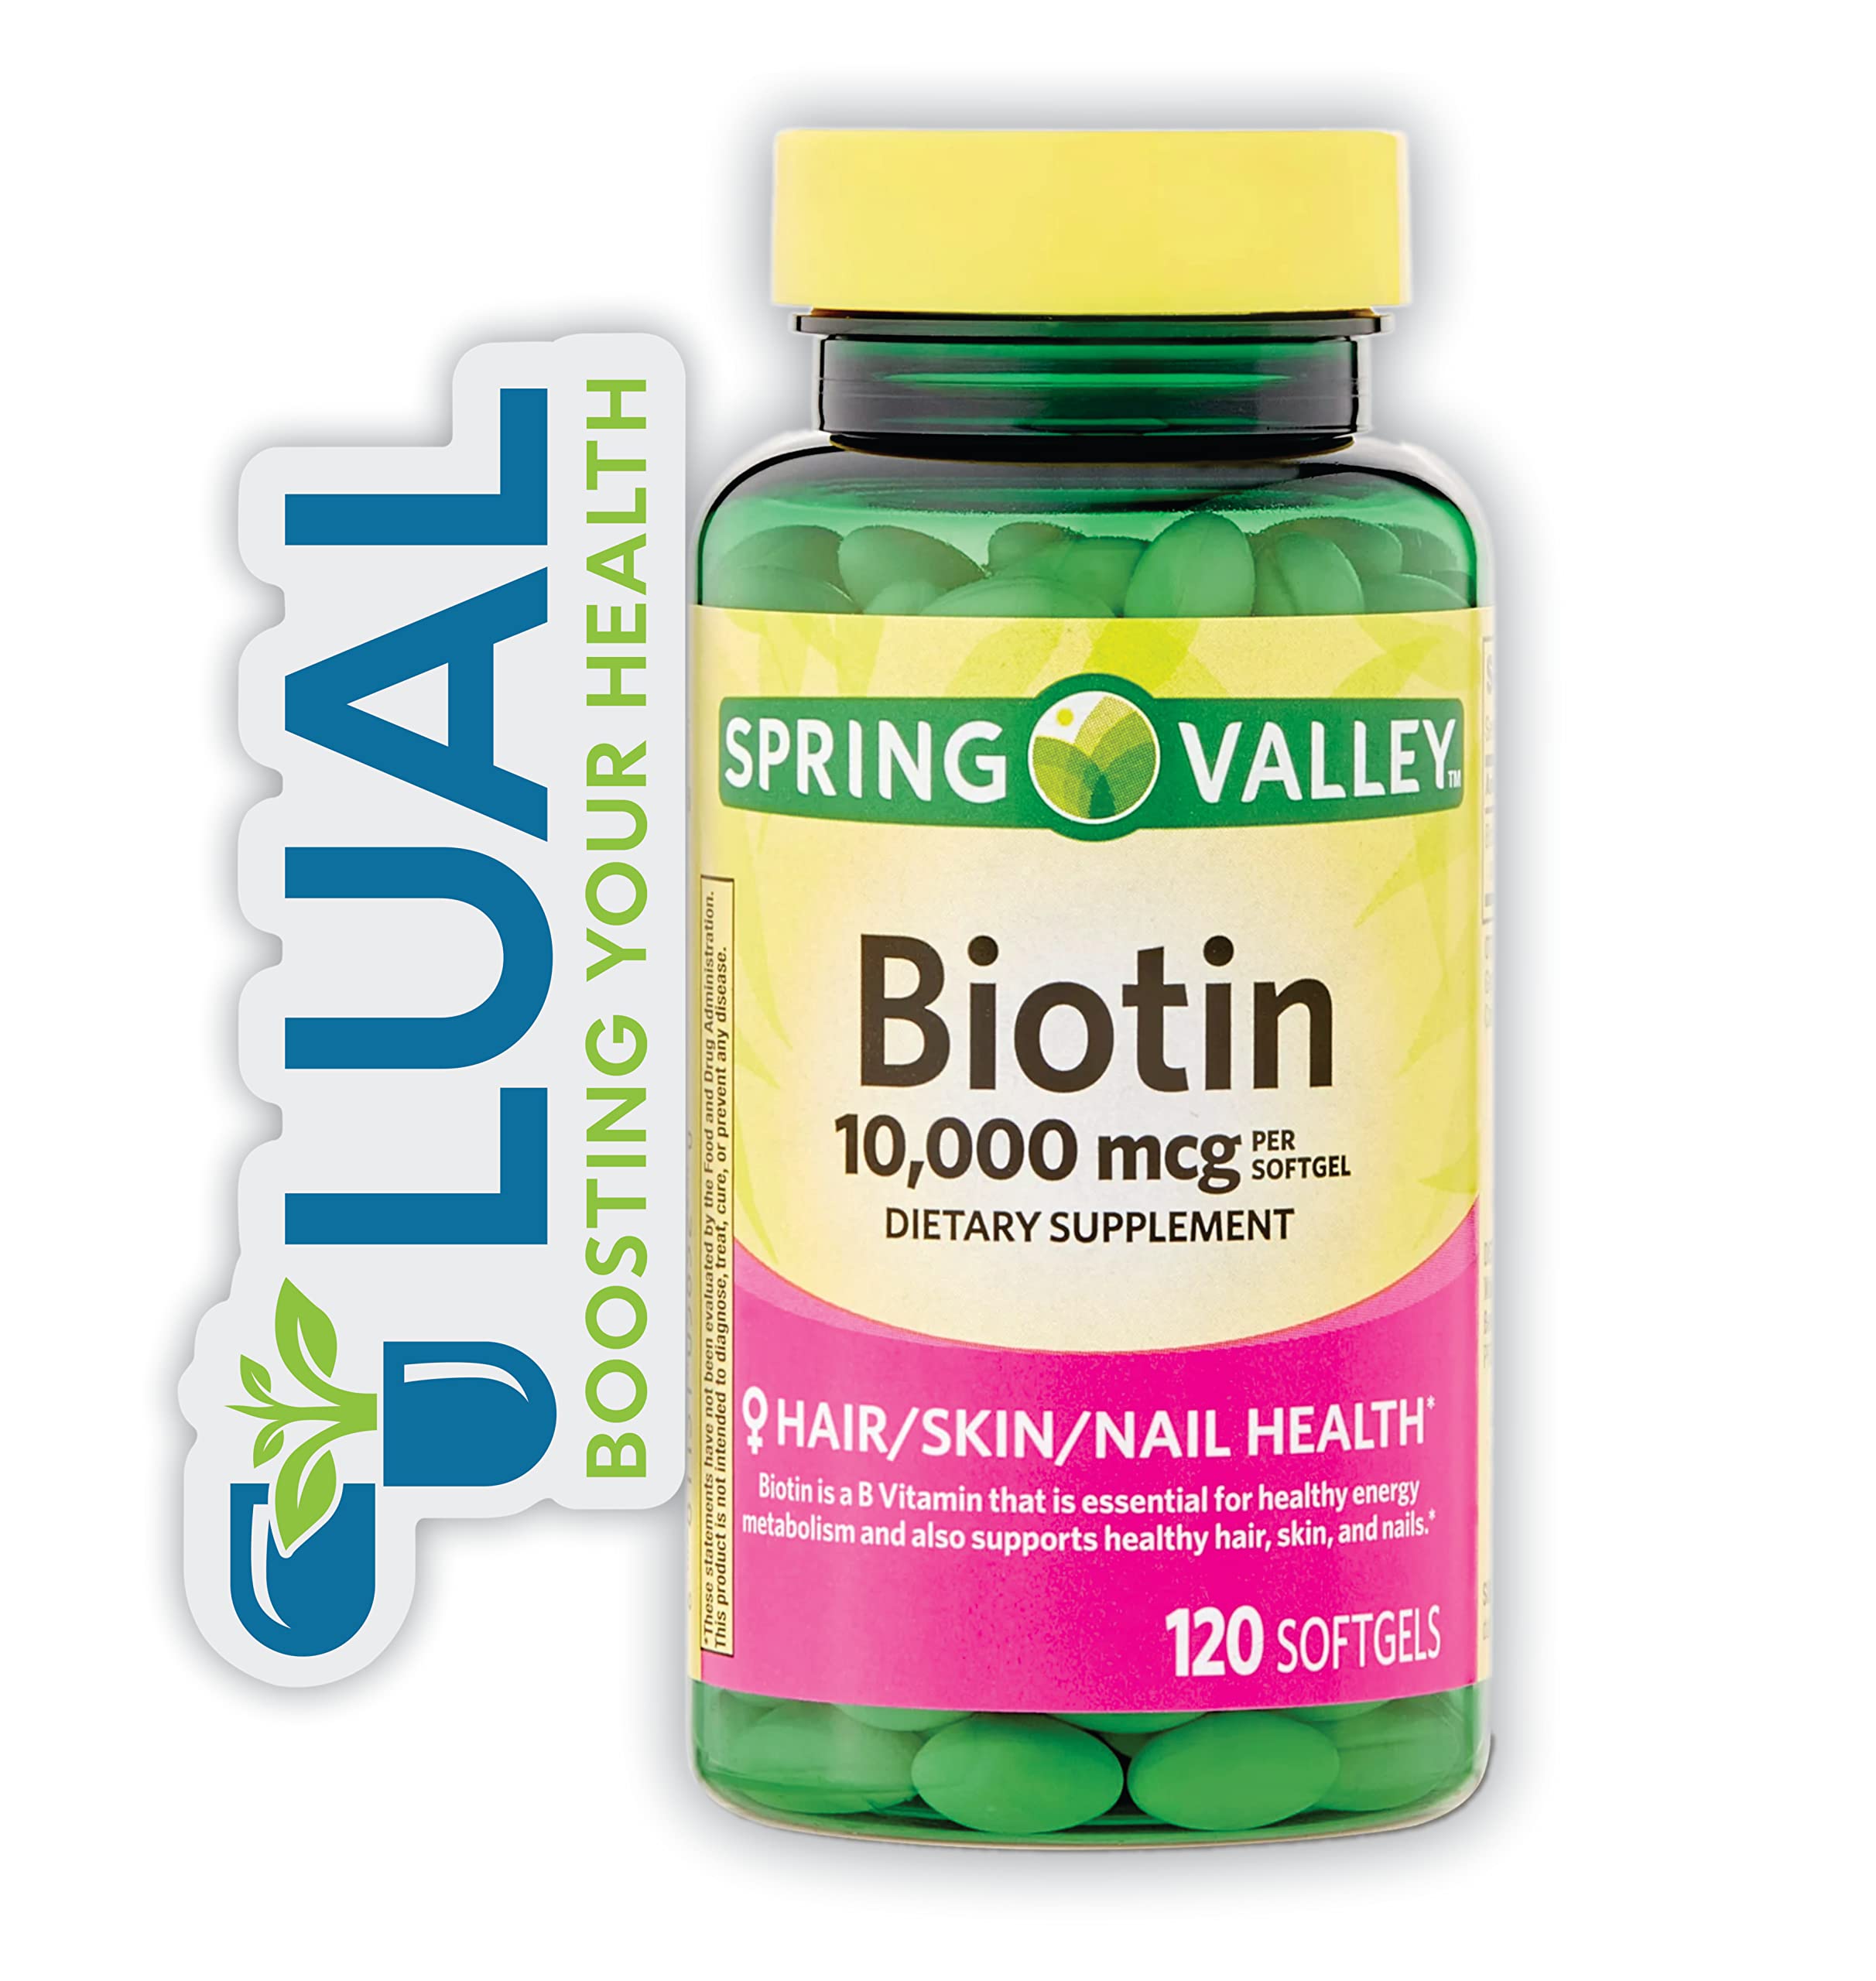 Hair Skin and Nails with Biotin – My Balance